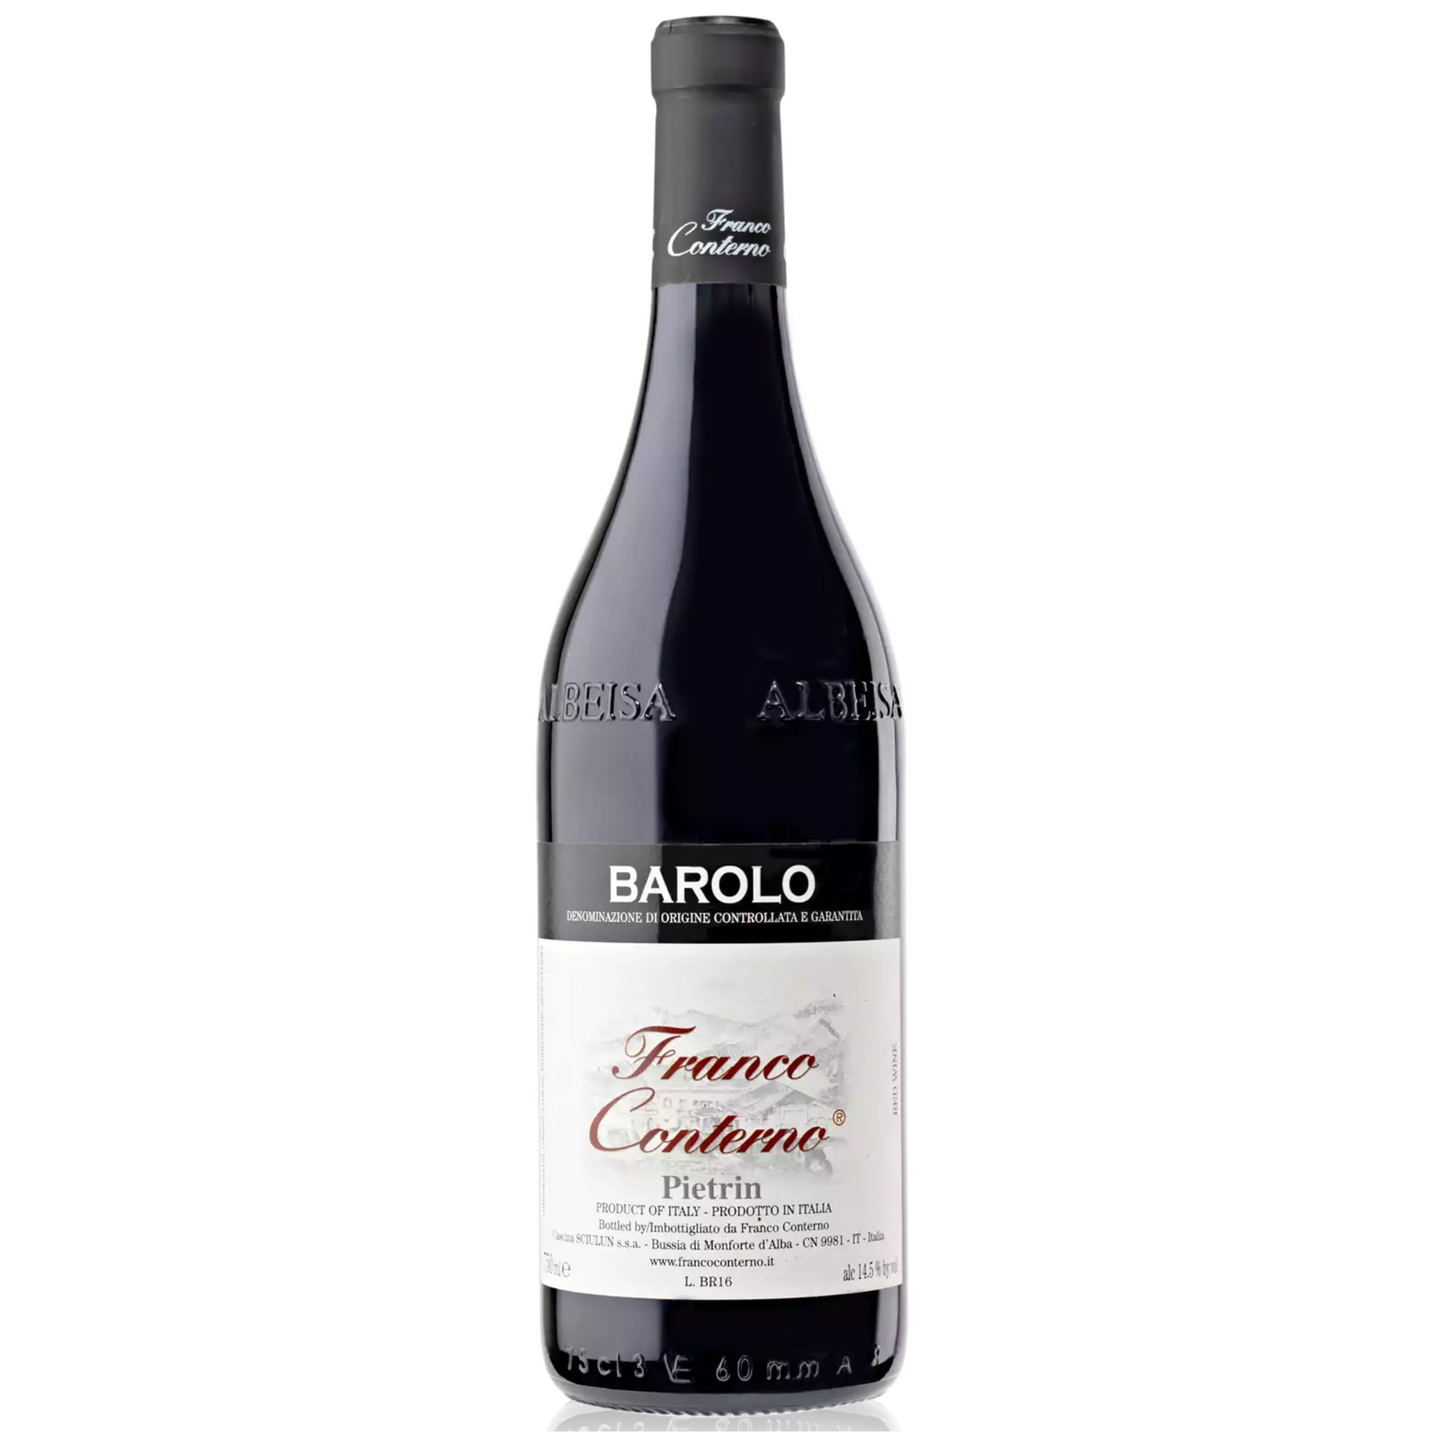 Franco Conterno 'Pietrin' Barolo 2016 (750 ml)